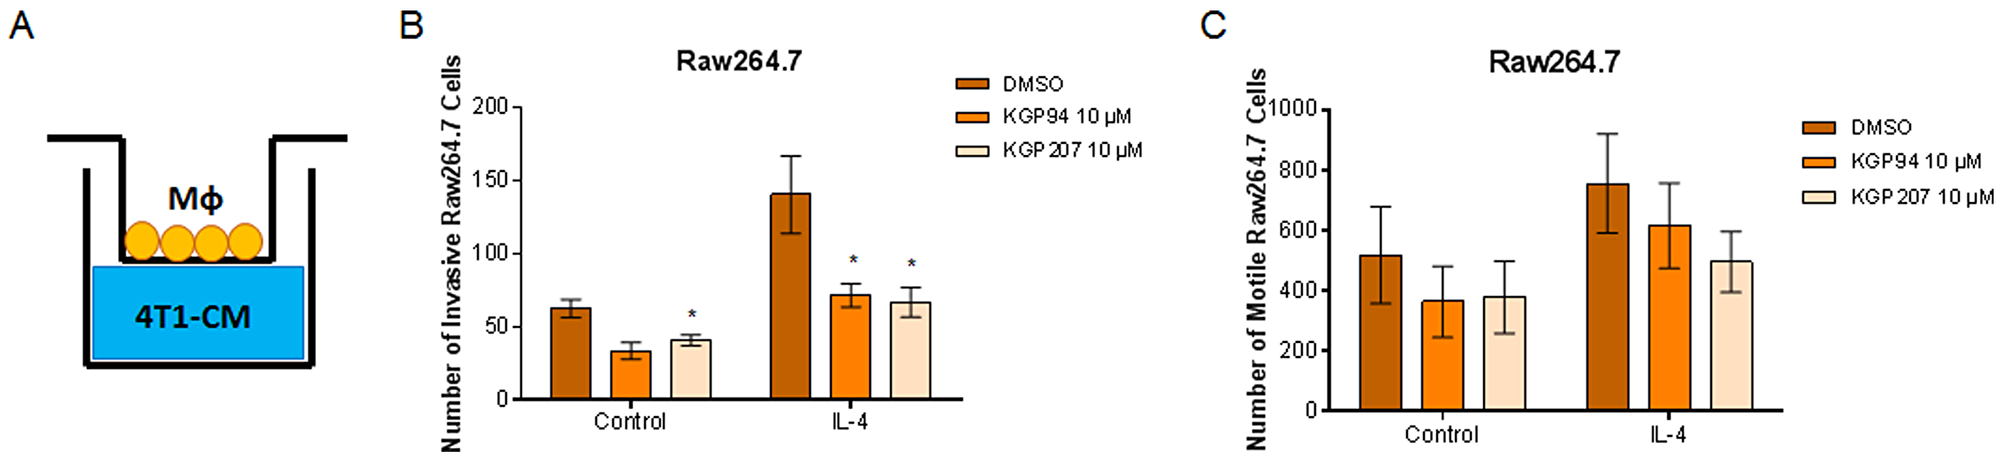 KGP94 and KGP207 reduce macrophage invasion.